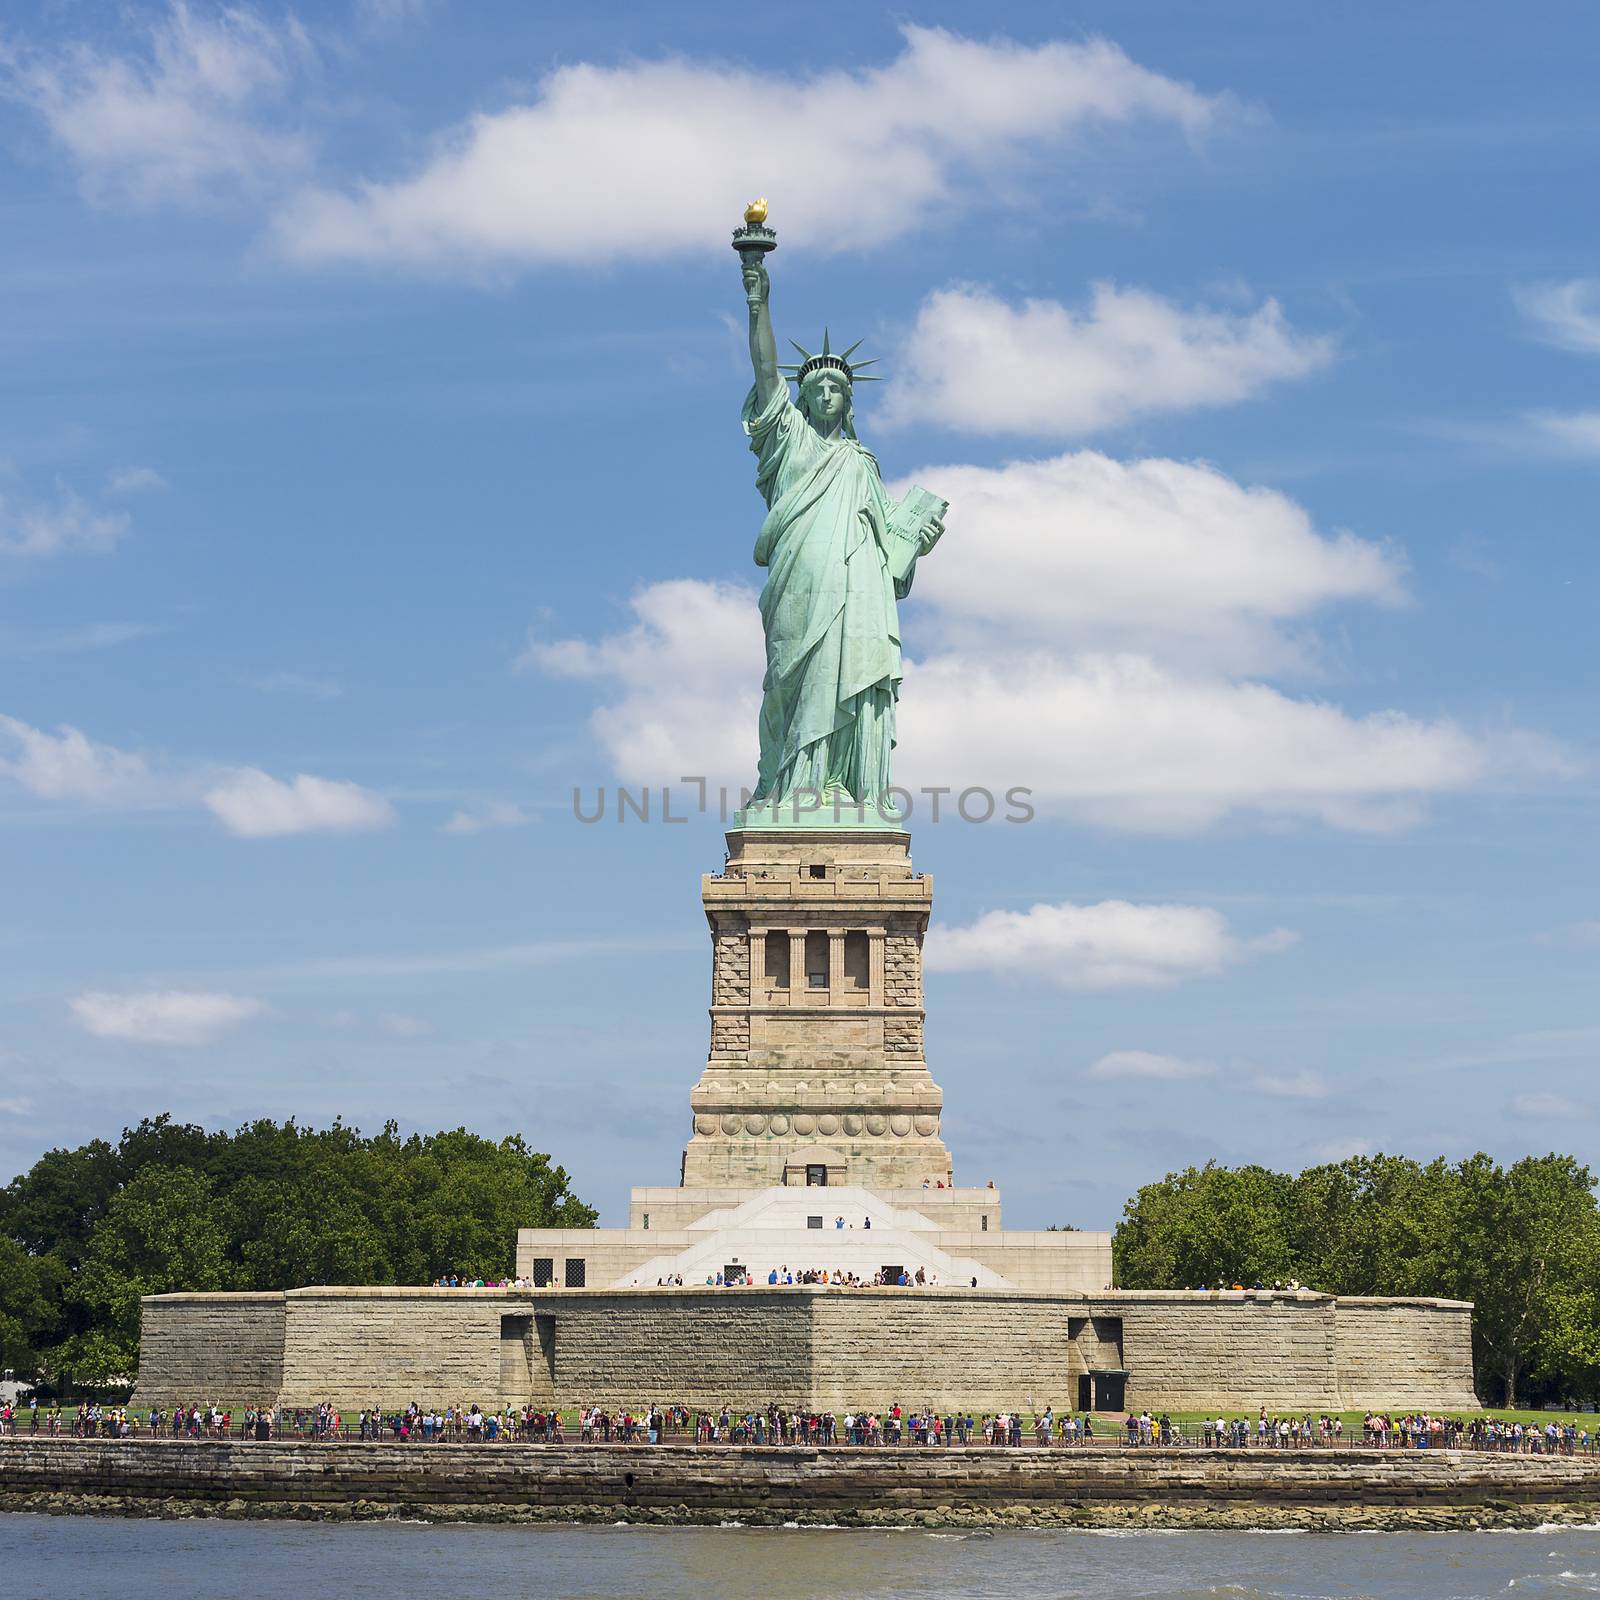 Statue of Liberty, Liberty Island, New York.